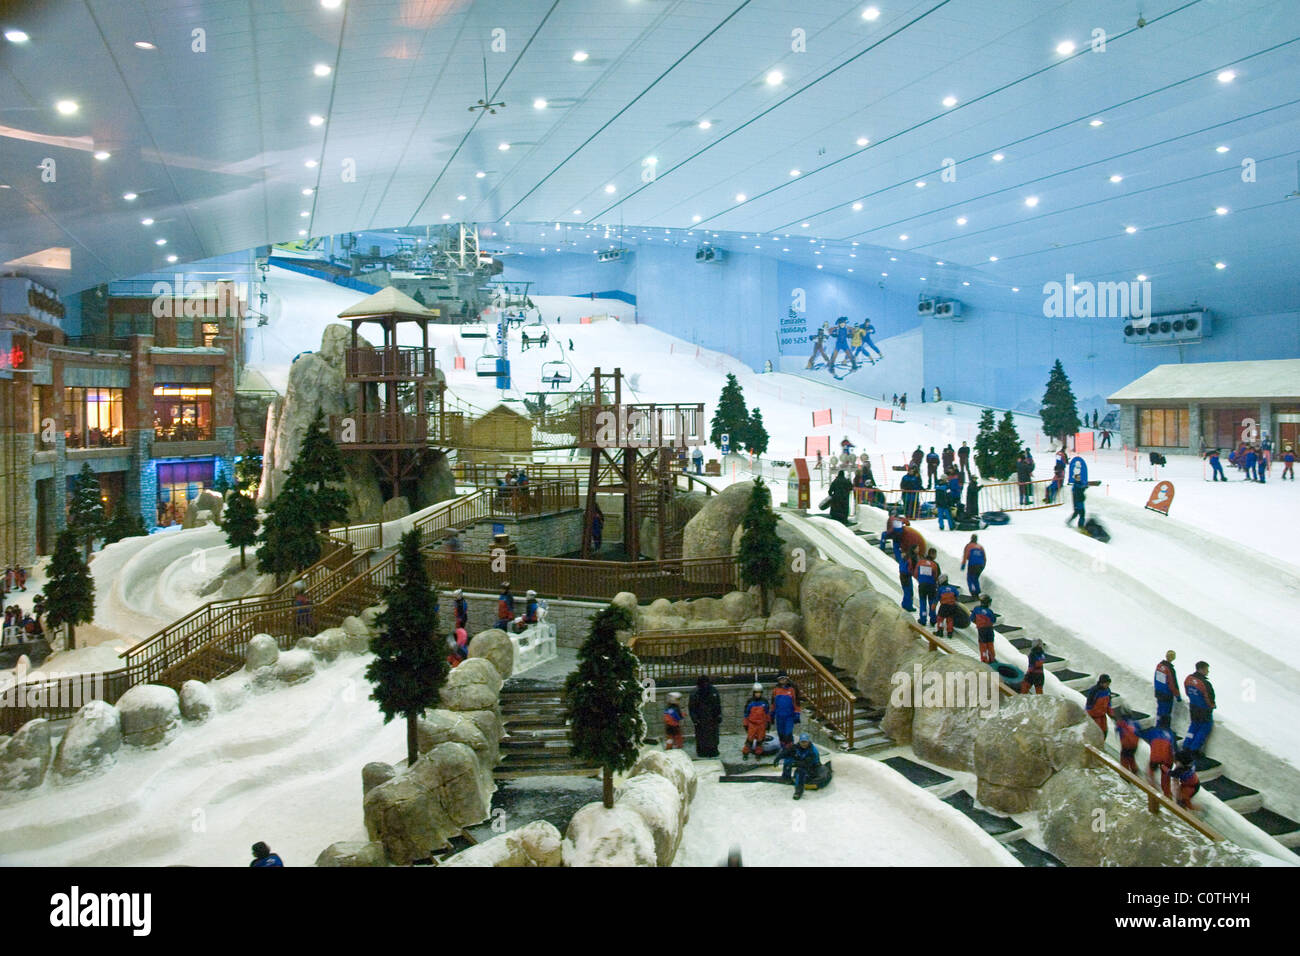 Skiing in Dubai The winter leisure park in the Mall of the Emirates in Dubai United Arab Emirates Stock Photo